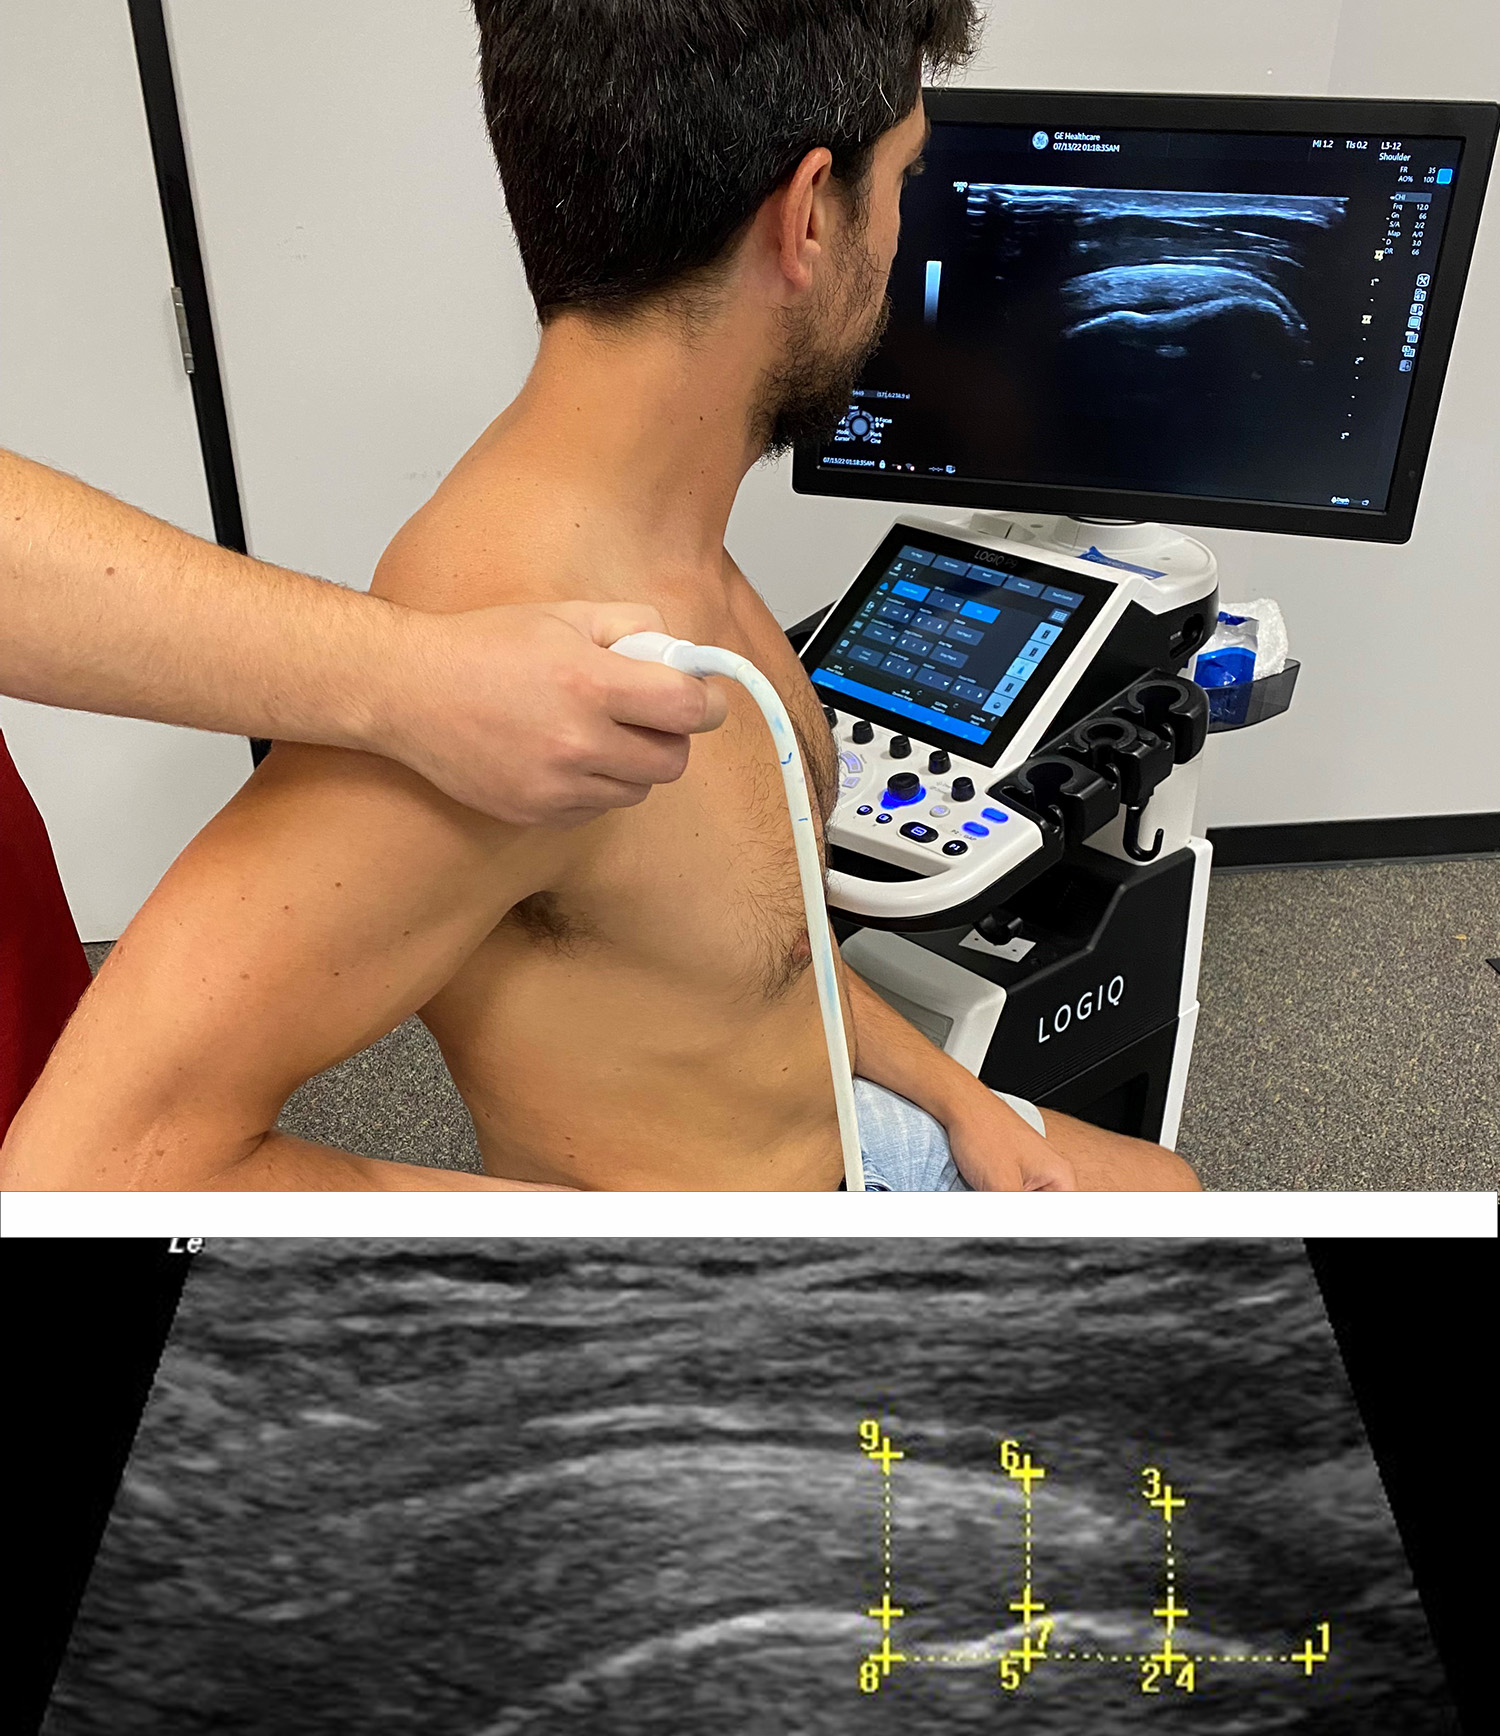 Ultrasounding a shoulder with ultrasound image below